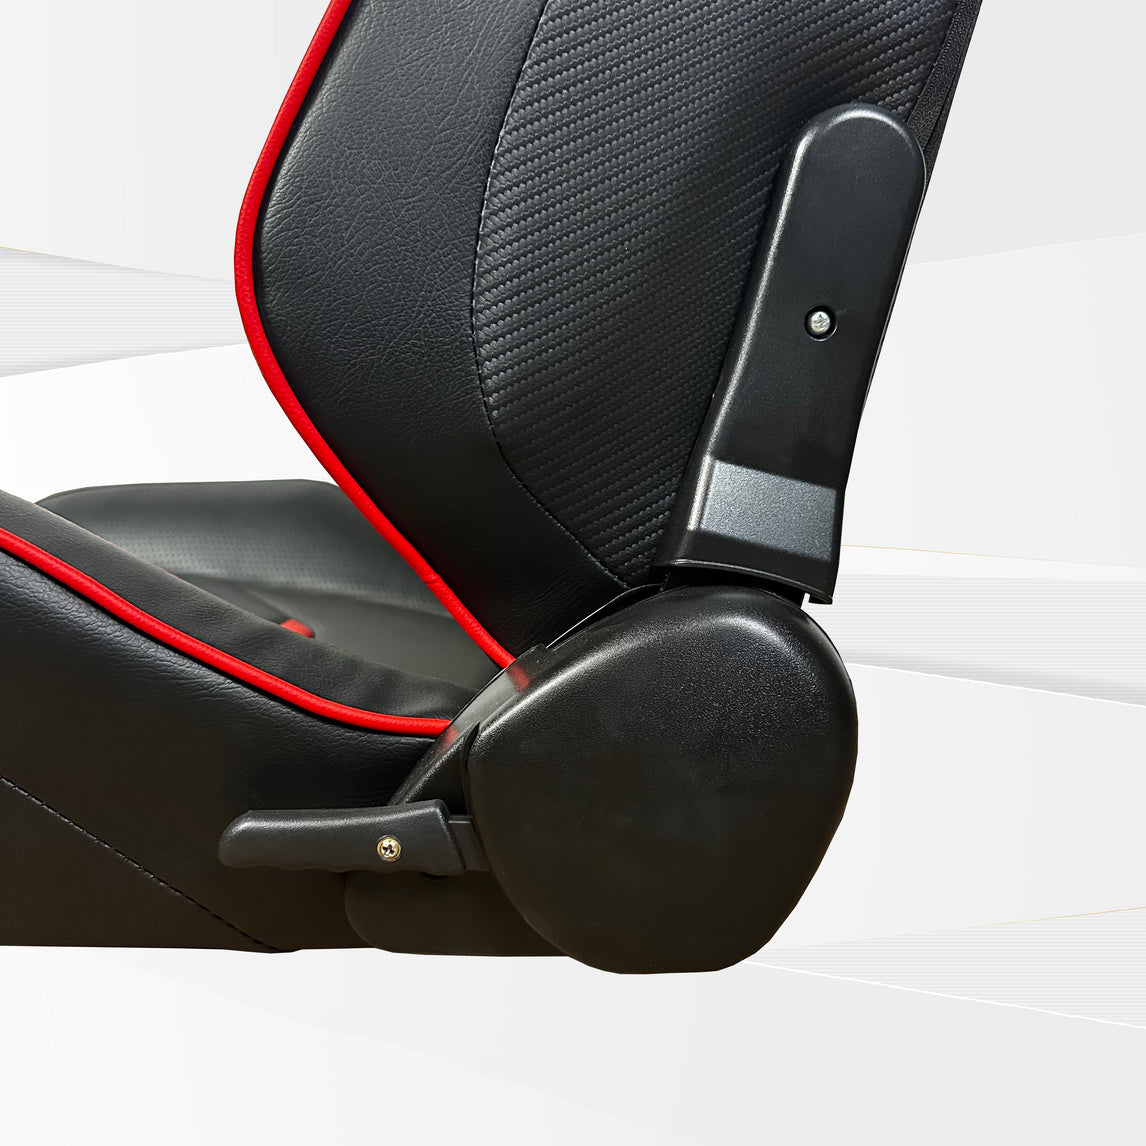 Oplite - BUCKET SEAT GTR SIEGE BAQUET SIMRACING - Chaise gamer